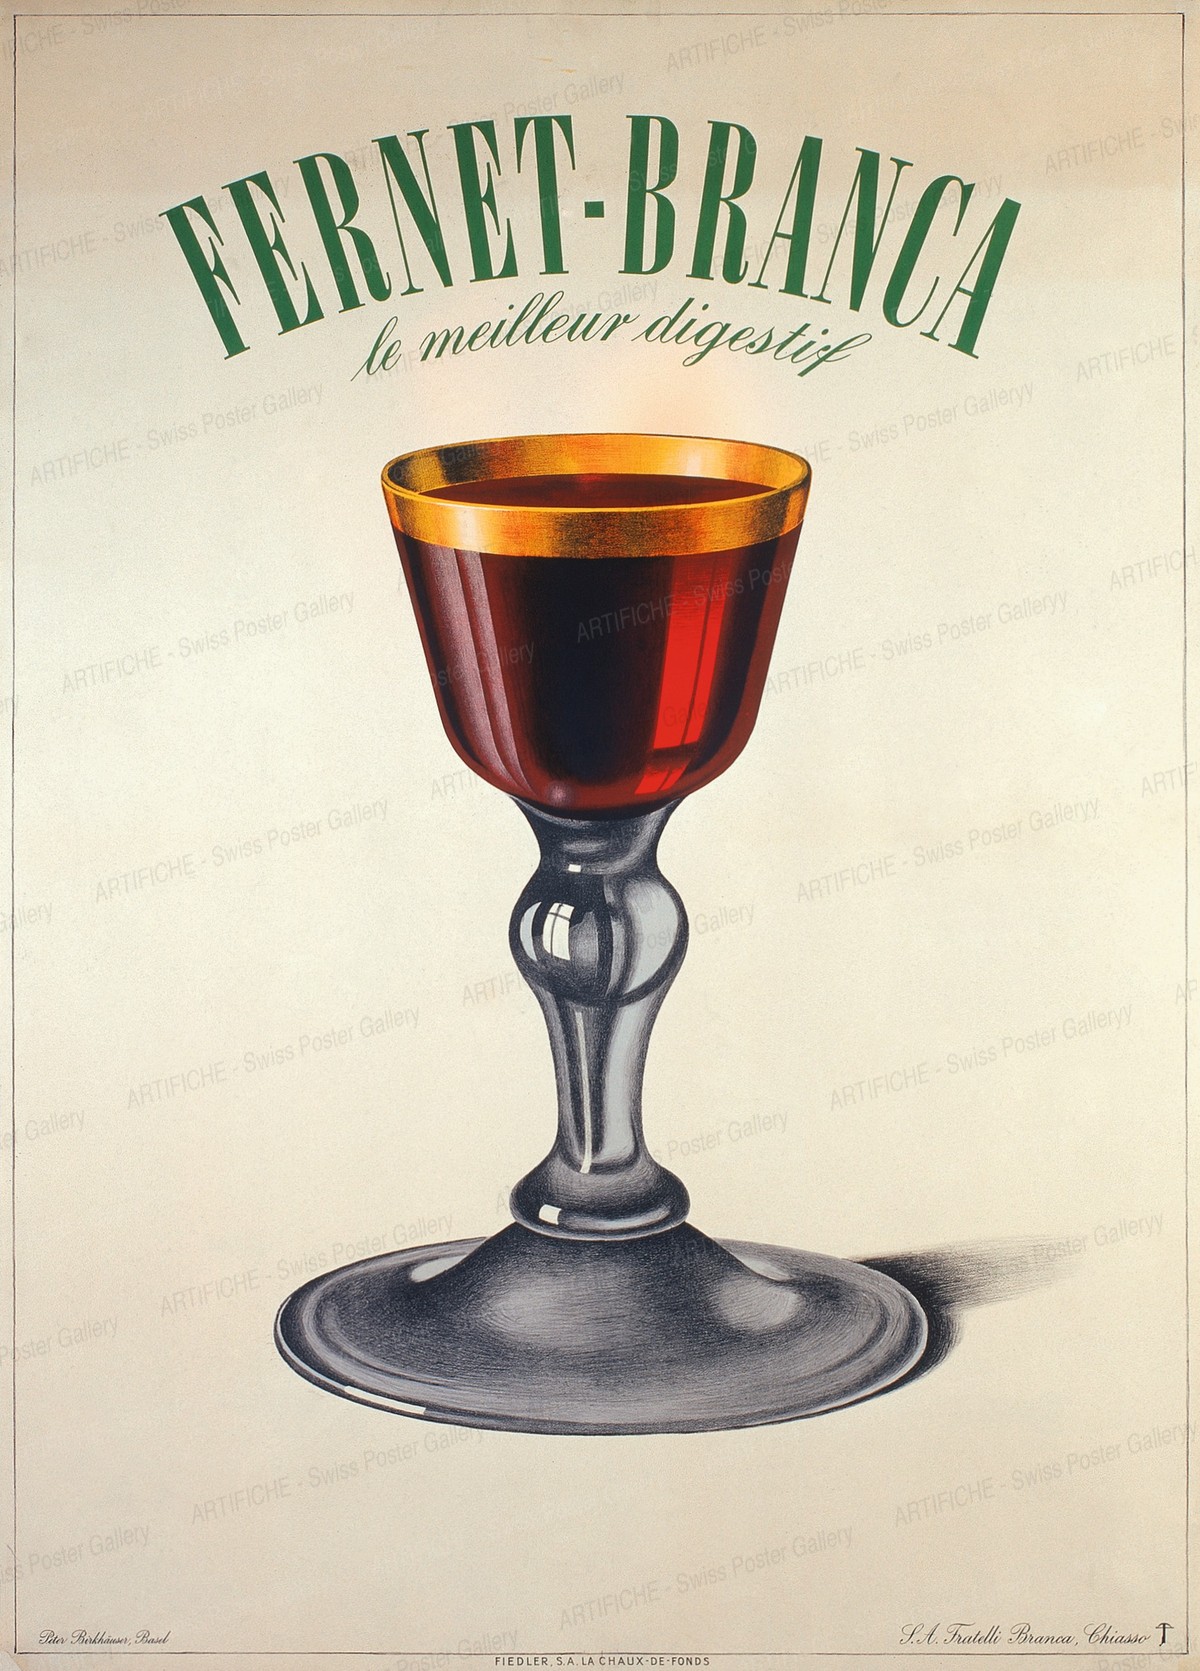 Fernet Branca ..the best digestif…, Peter Birkhäuser